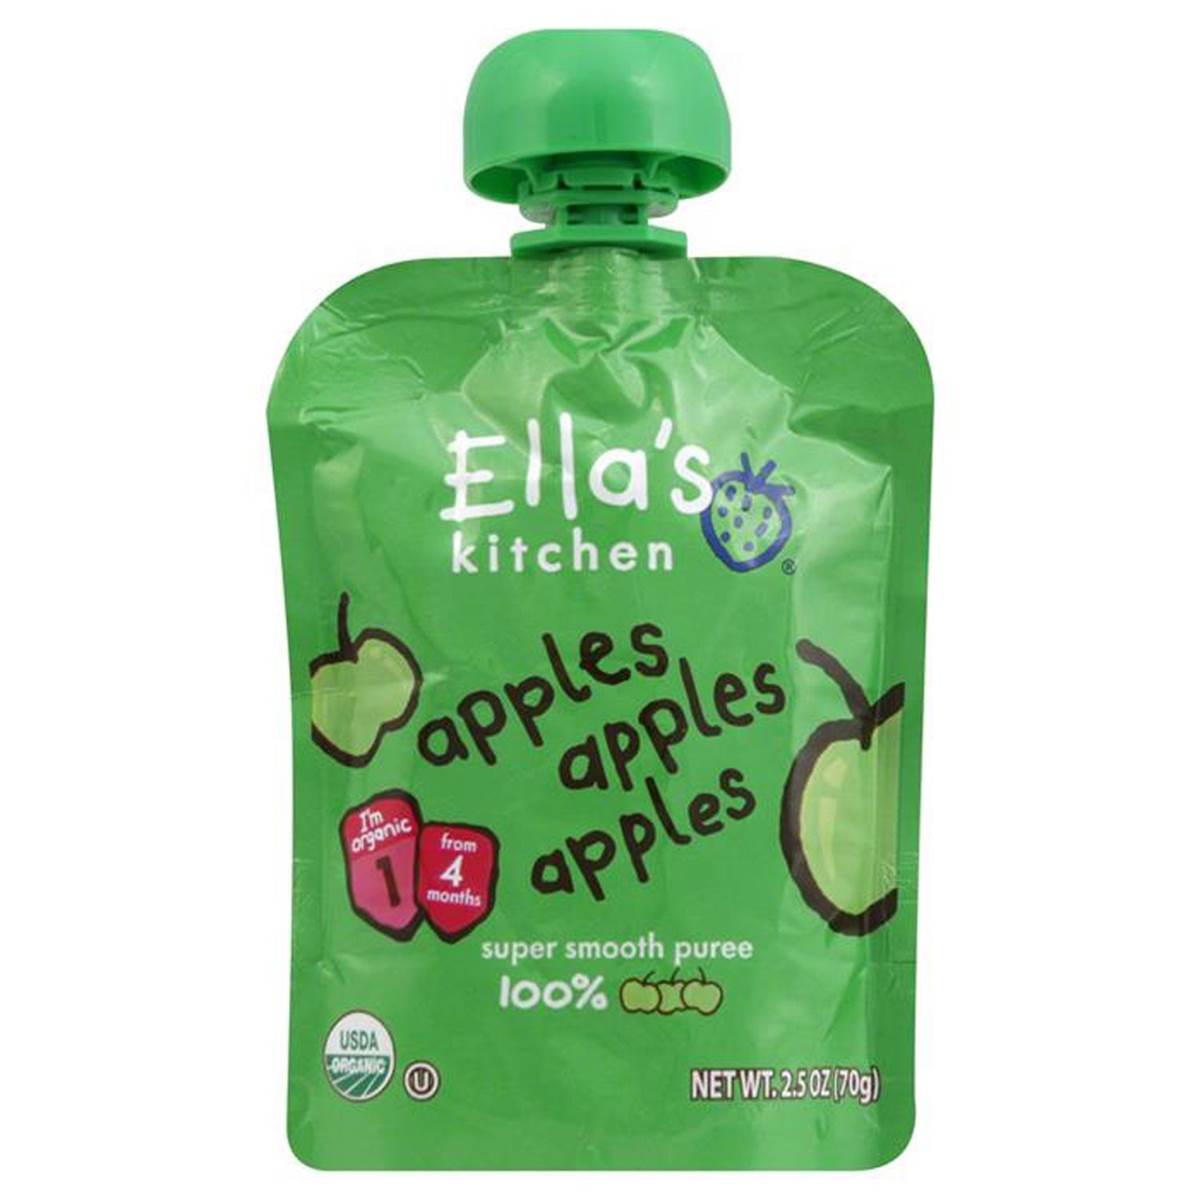 Ellas Kitchen Apples Apples Apples - 70g